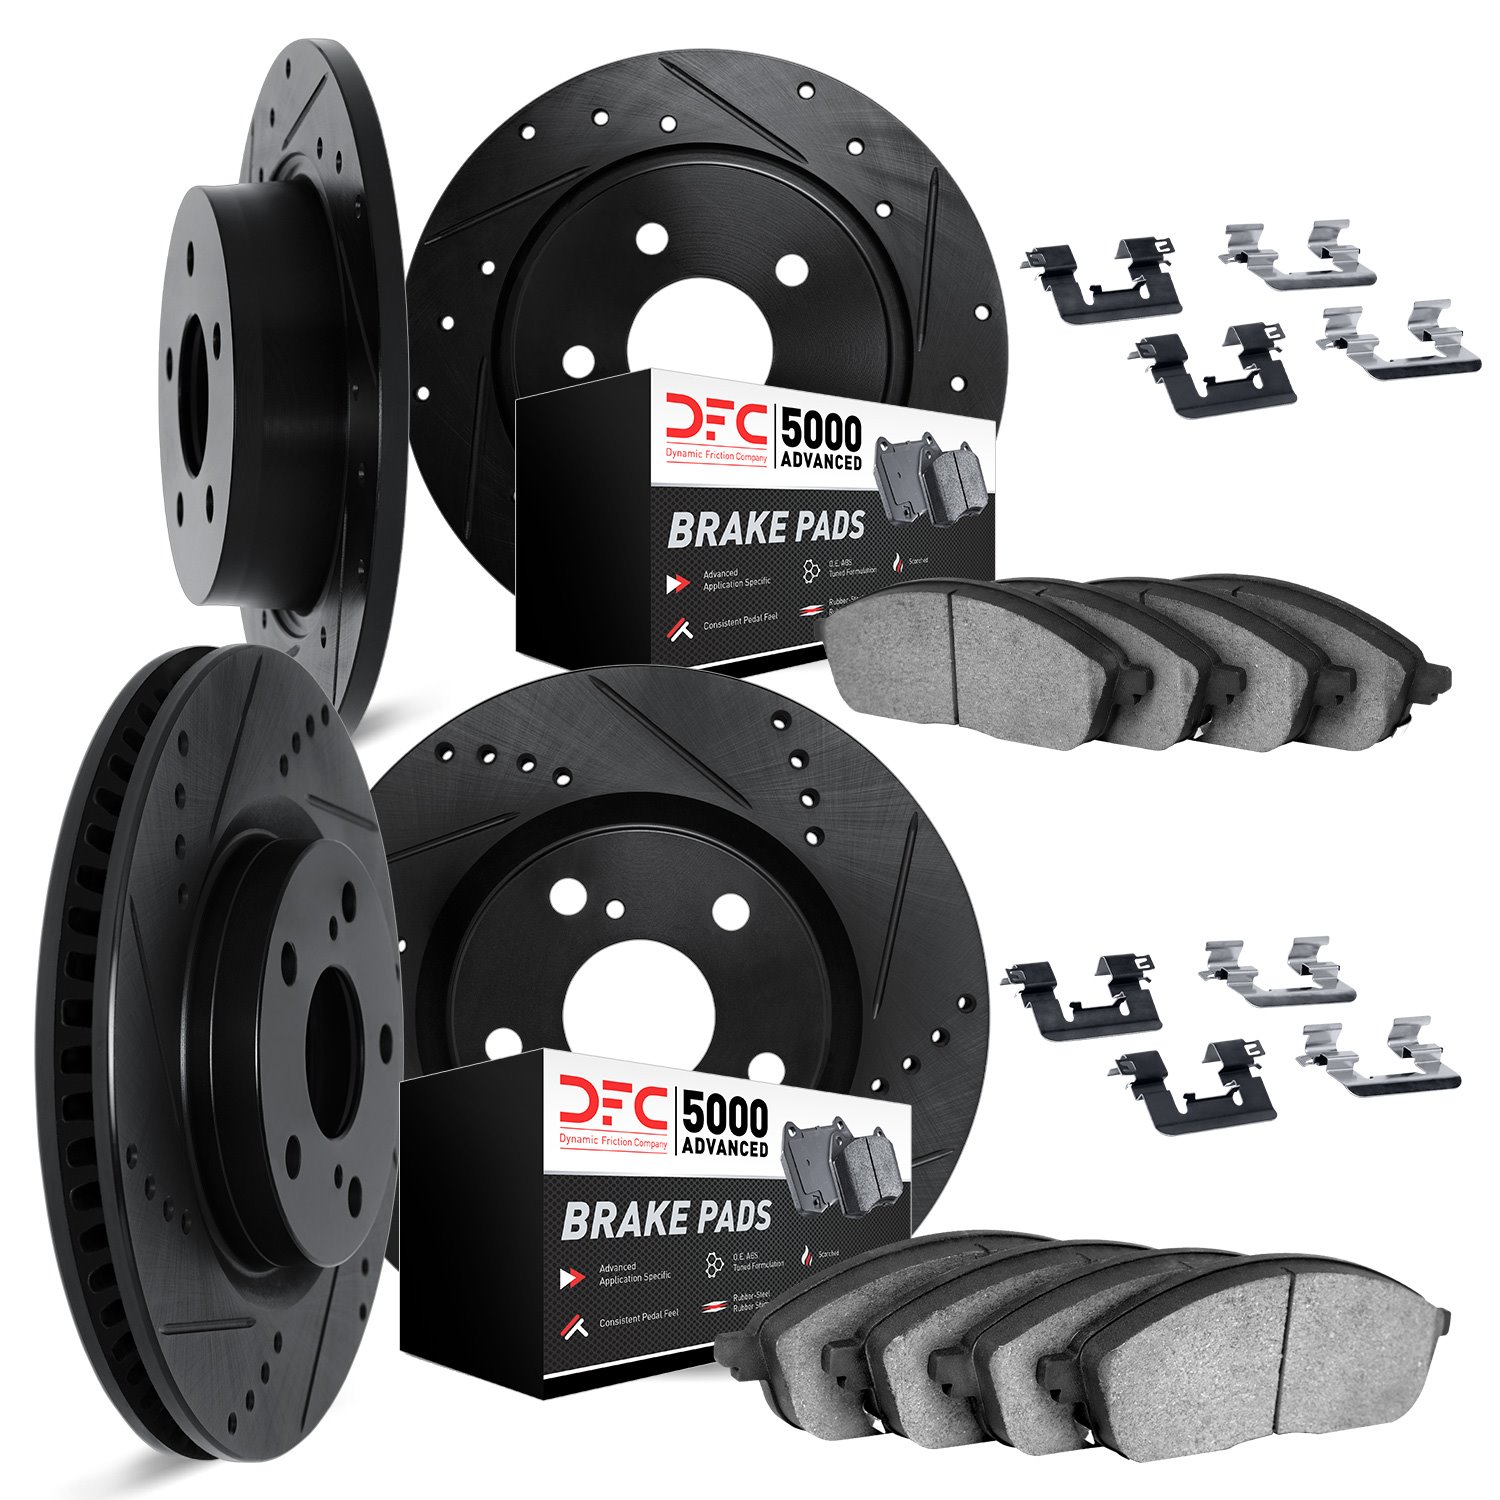 8514-42006 Drilled/Slotted Brake Rotors w/5000 Advanced Brake Pads Kit & Hardware [Black], 1999-2004 Mopar, Position: Front and